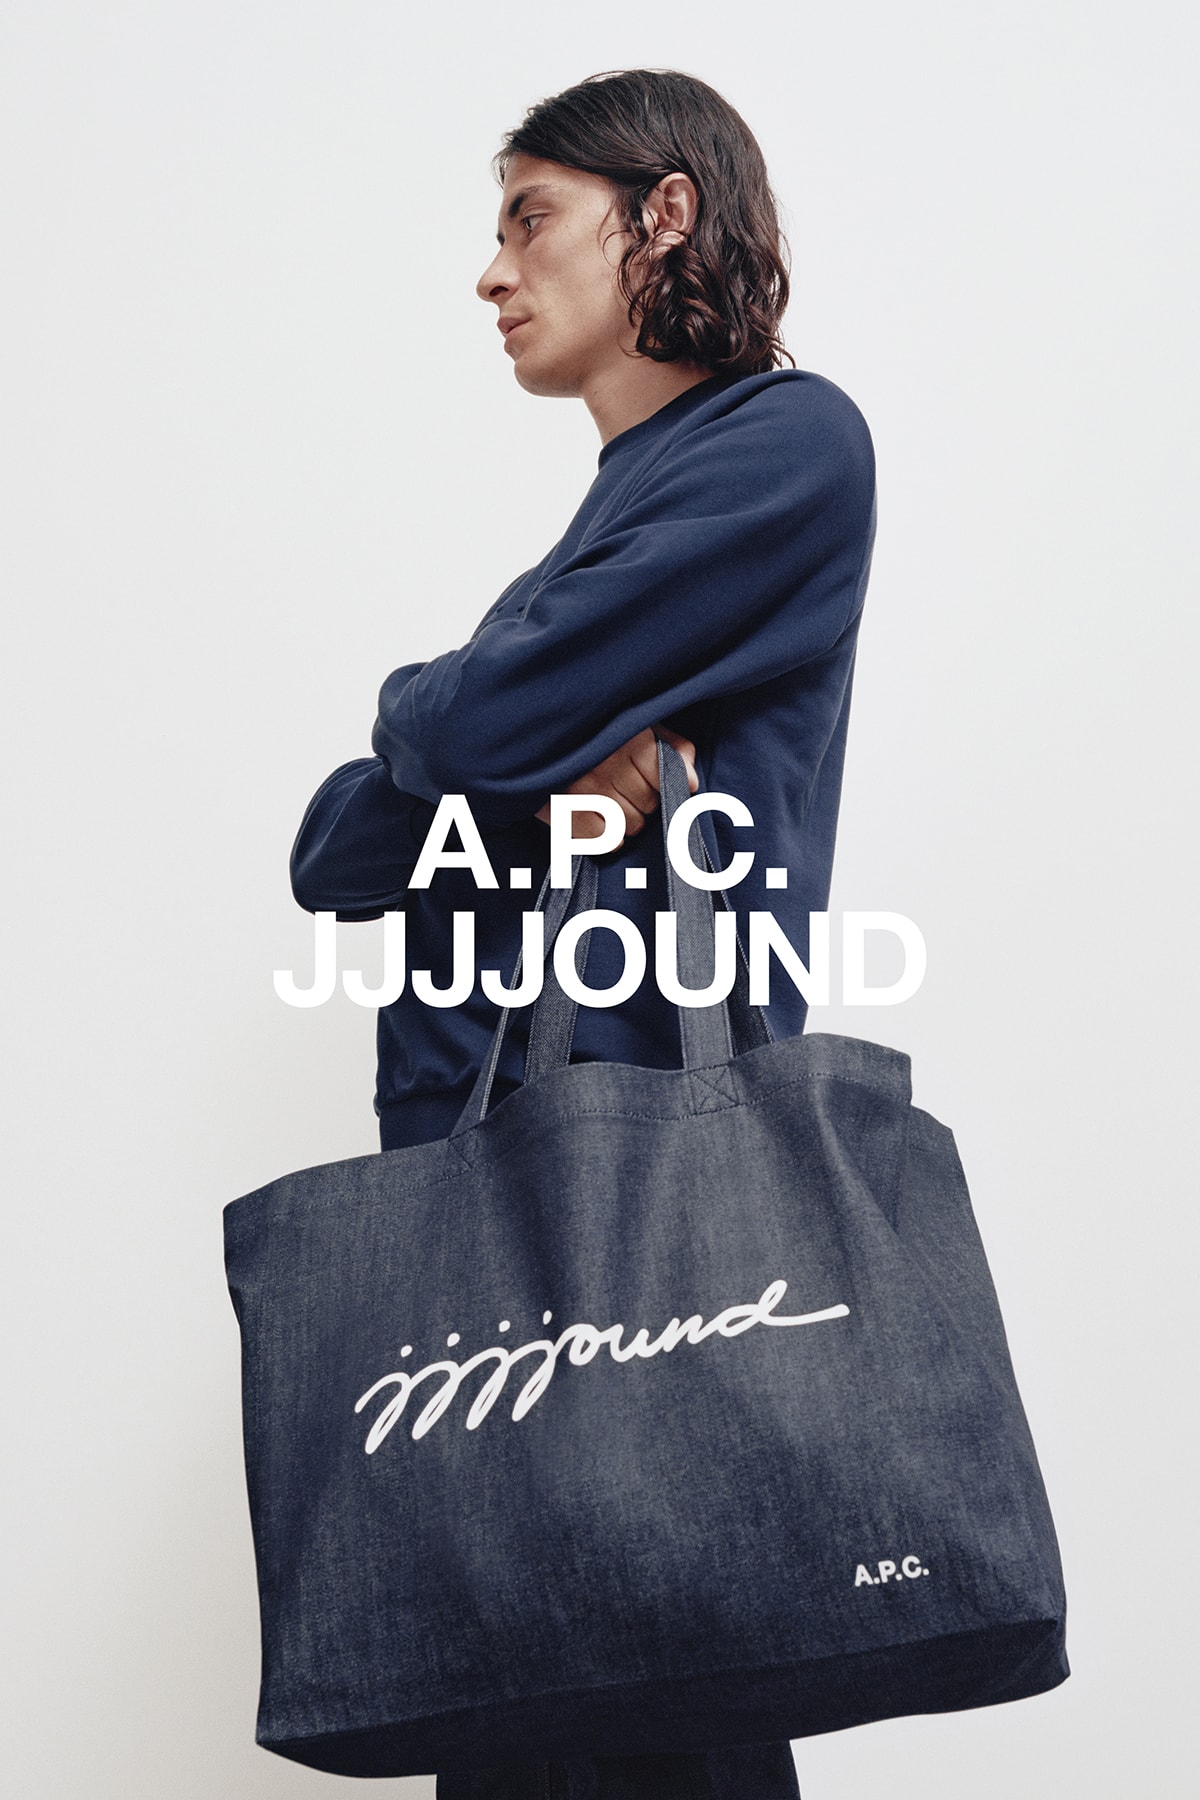 JJJJound x A.P.C. Collection Lookbook Shopping Bag